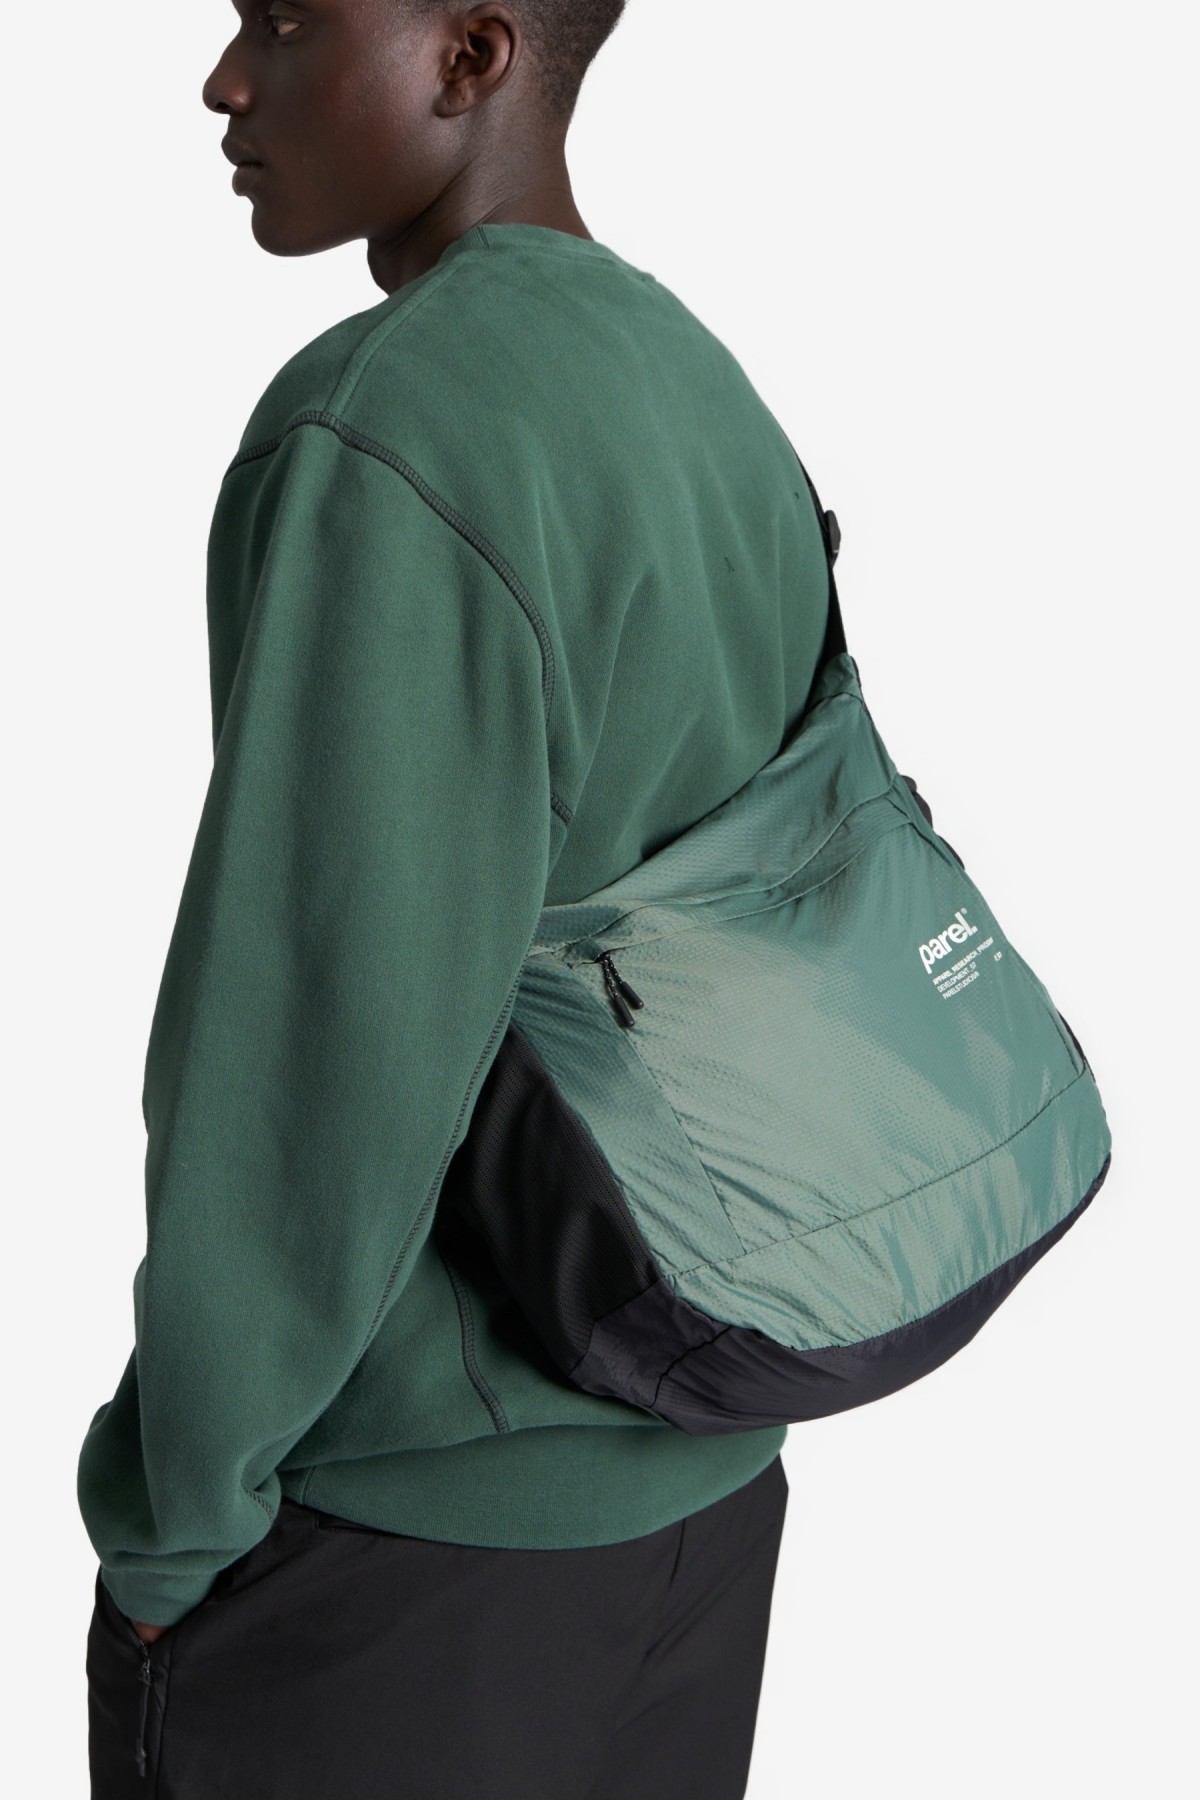 Parel Lokka Bag in Green/Black